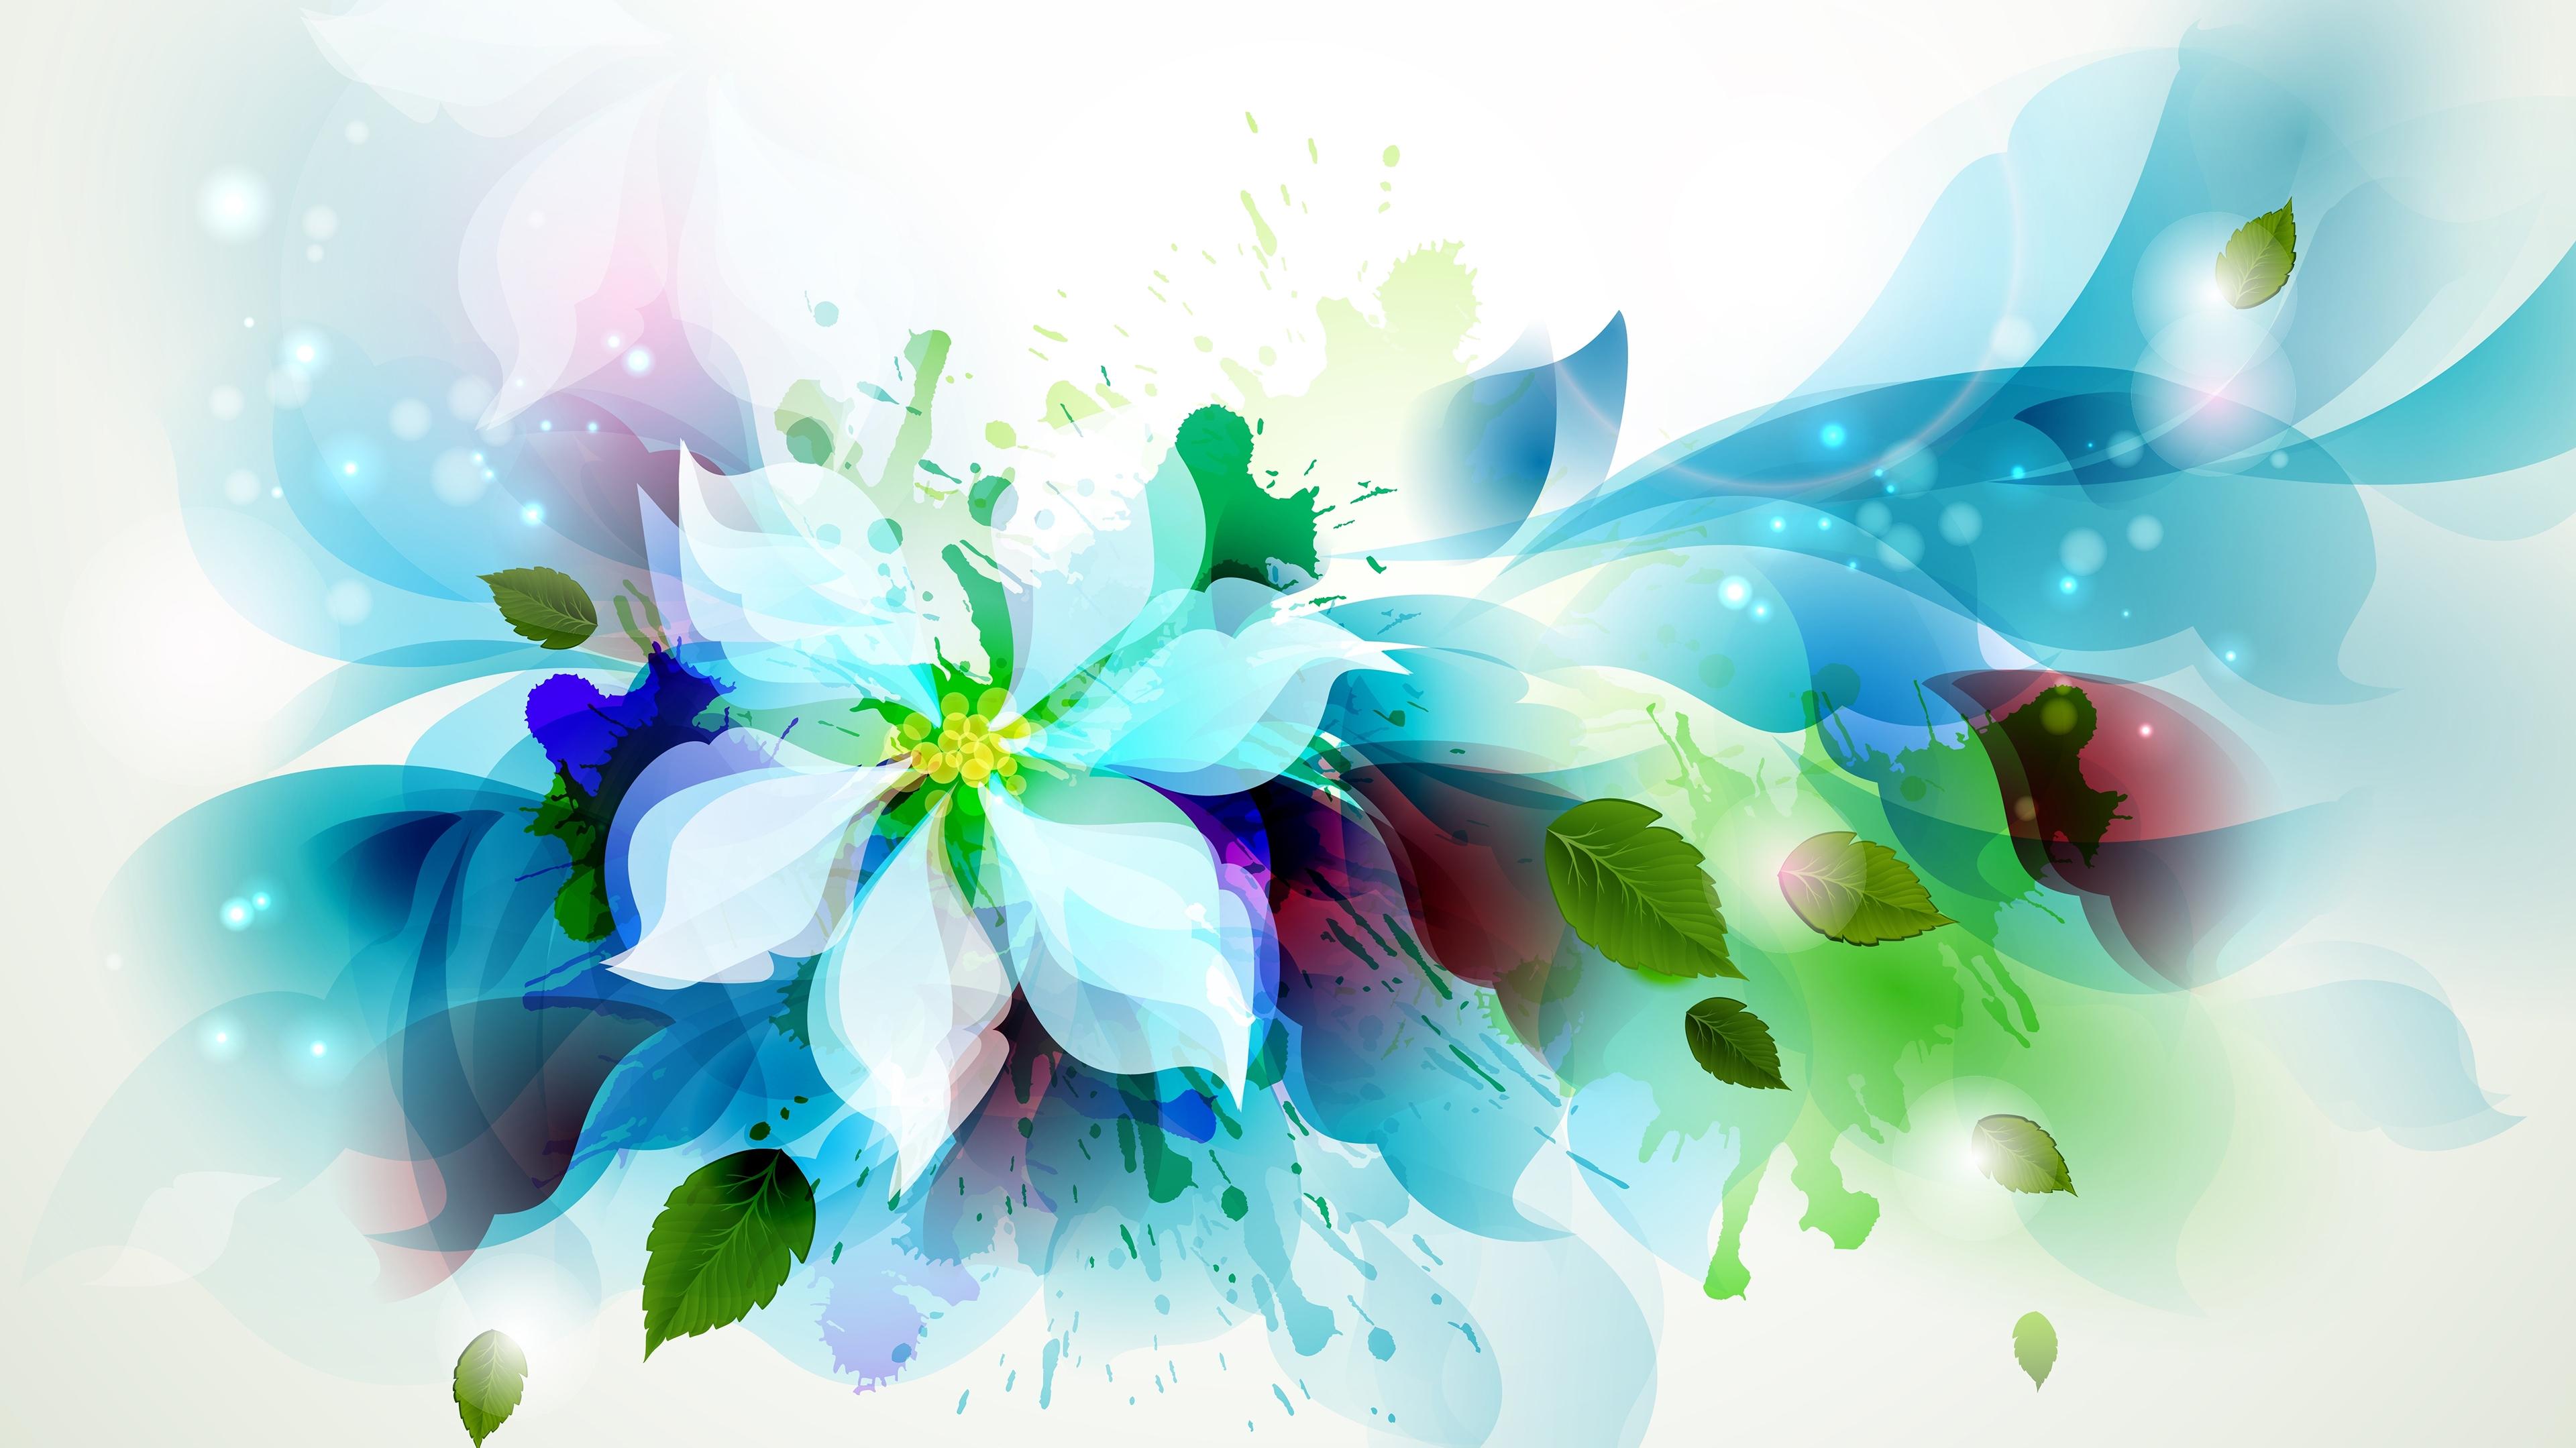 Artistic Flower 4k Ultra HD Wallpaper